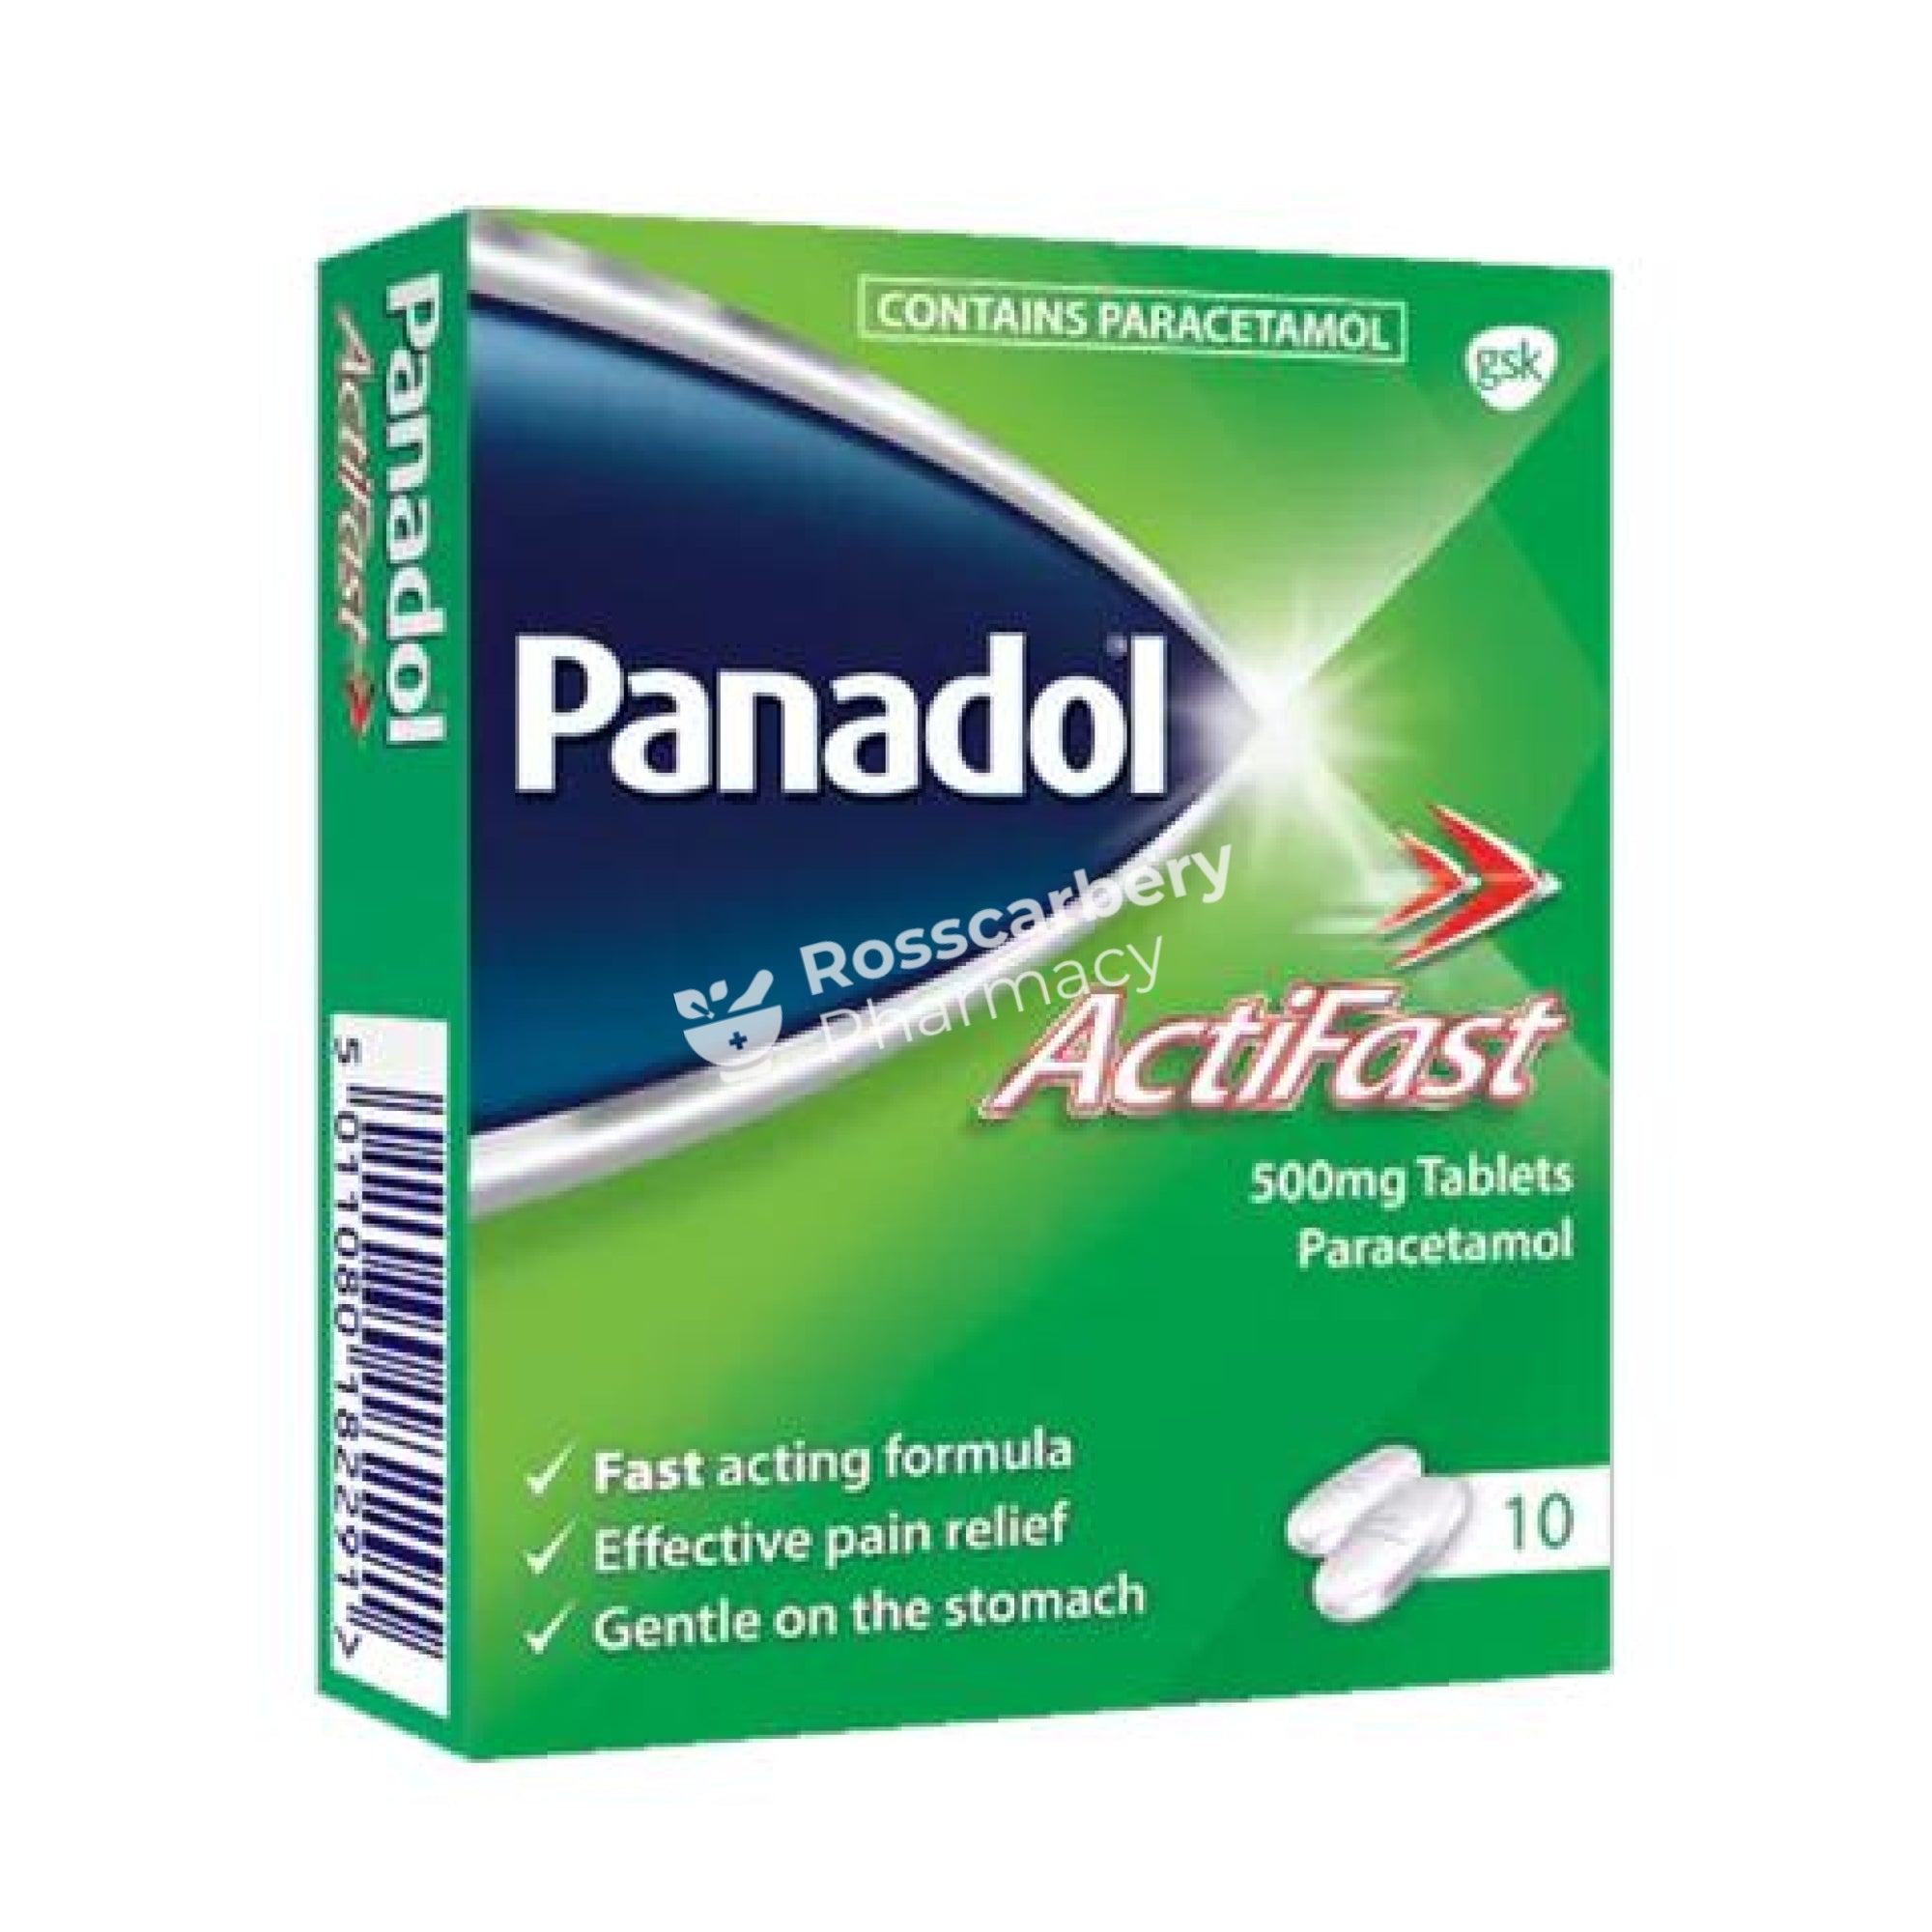 Panadol Actifast 500Mg Tablets Paracetamol Pain Relief & Headache